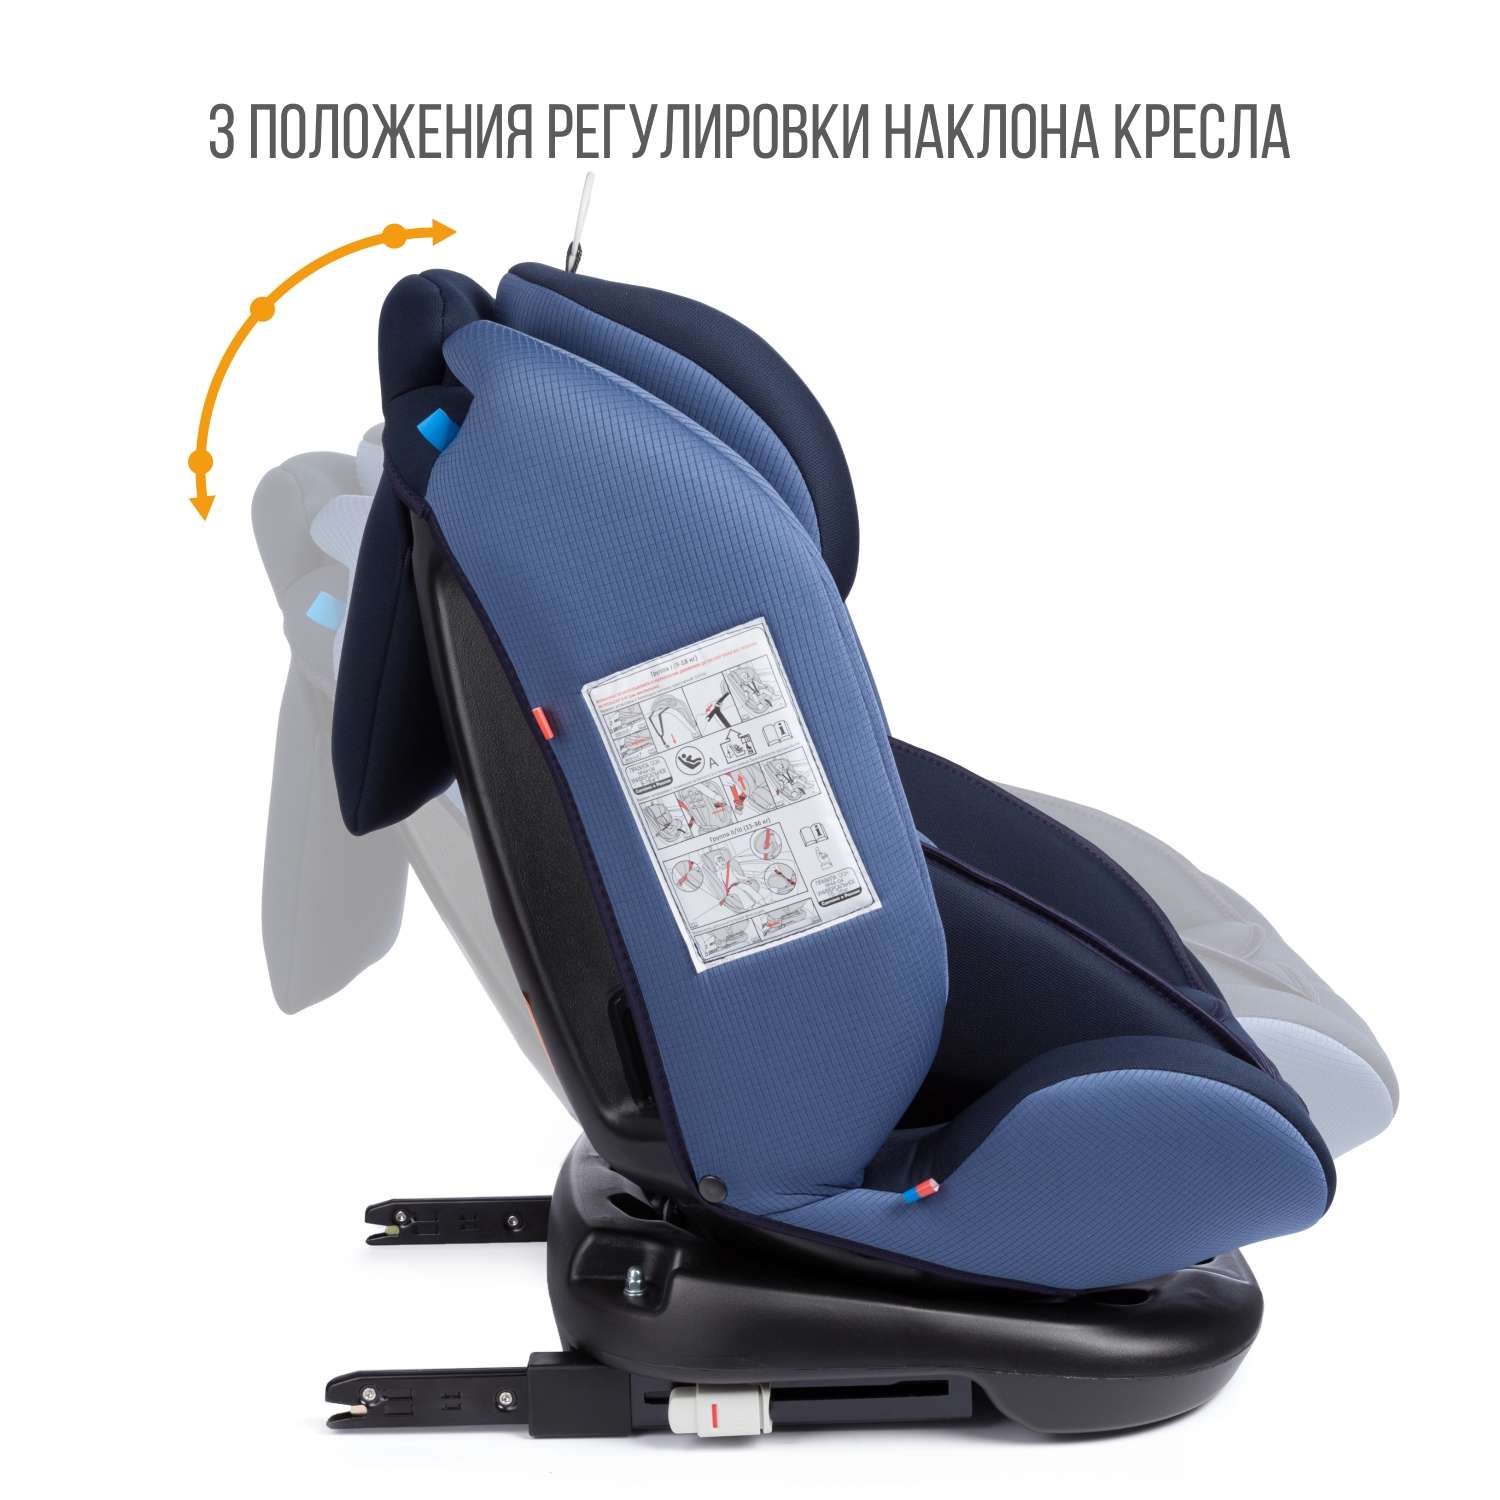 Автомобильное кресло ZLATEK УУД Zlatek Cruiser Isofix гр. 0+/I/II/III синий - фото 2